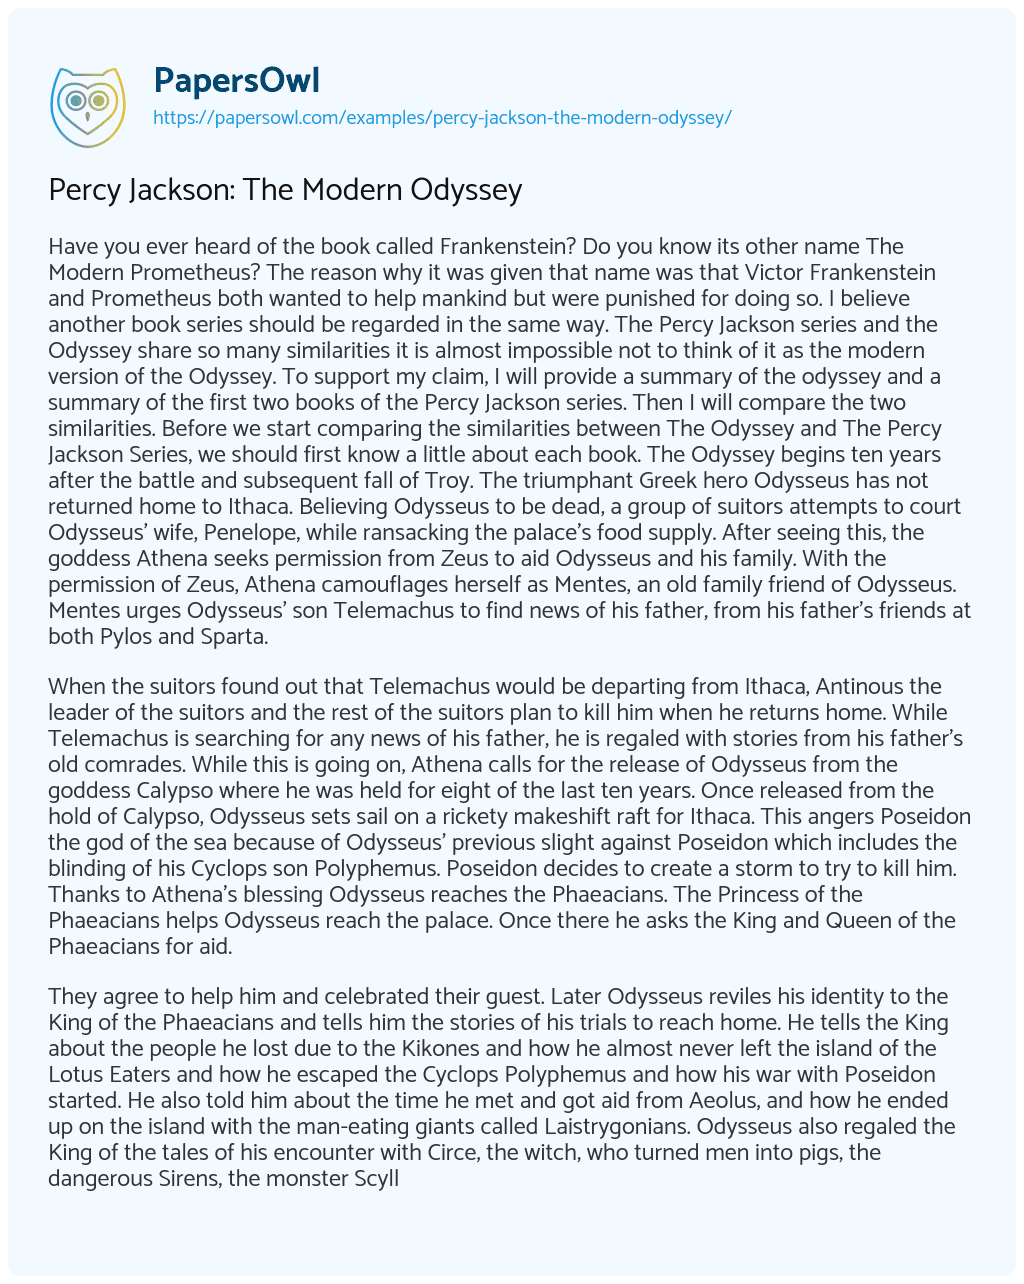 Essay on Percy Jackson: the Modern Odyssey